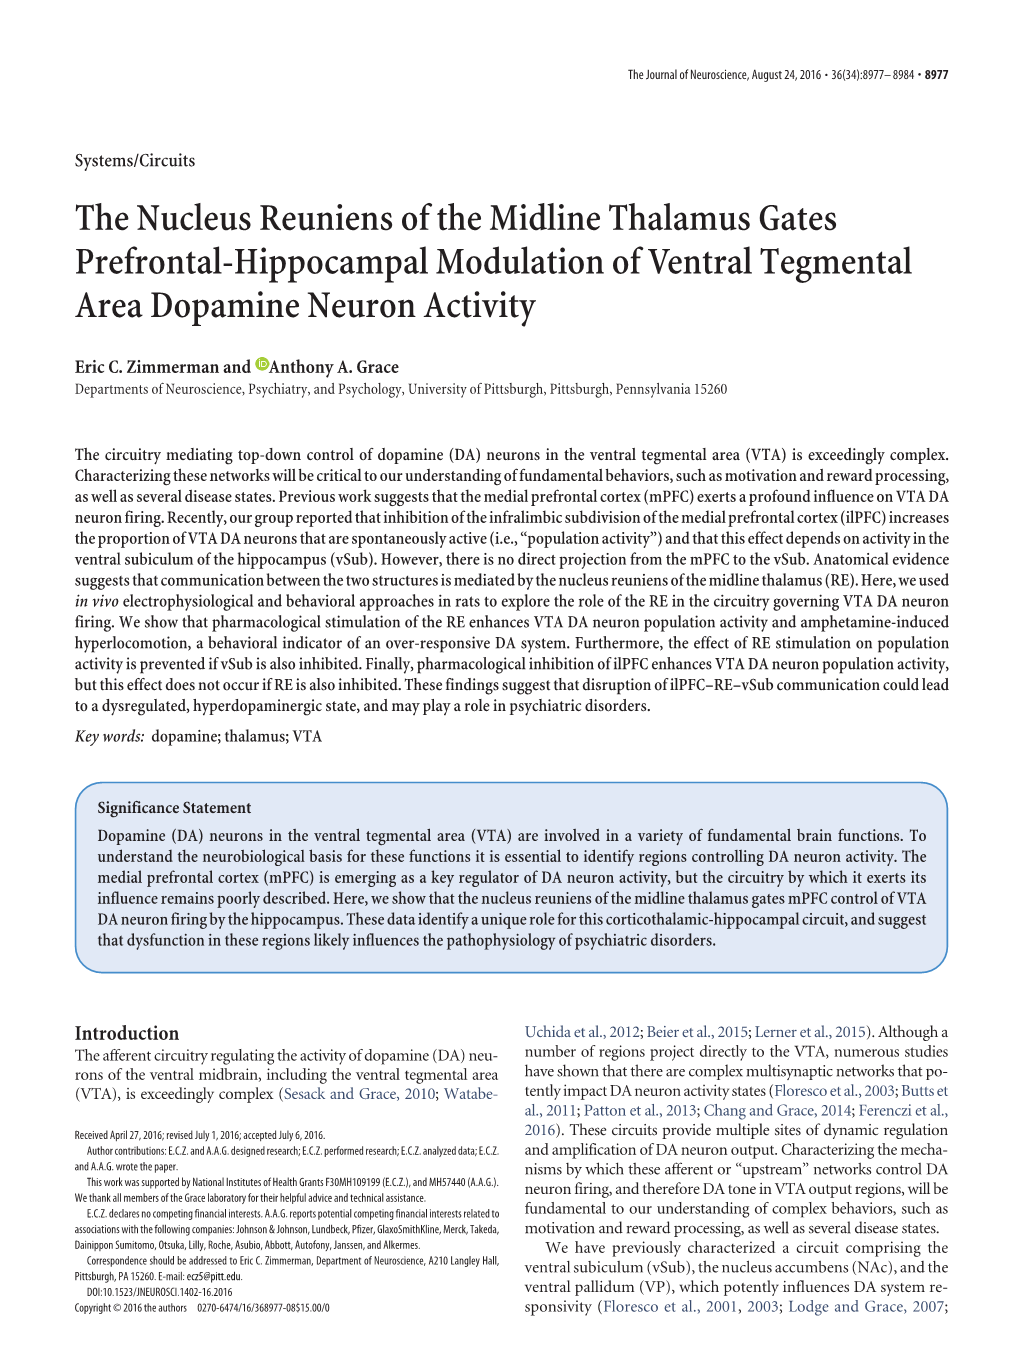 The Nucleus Reuniens of the Midline Thalamus Gates Prefrontal-Hippocampal Modulation of Ventral Tegmental Area Dopamine Neuron Activity